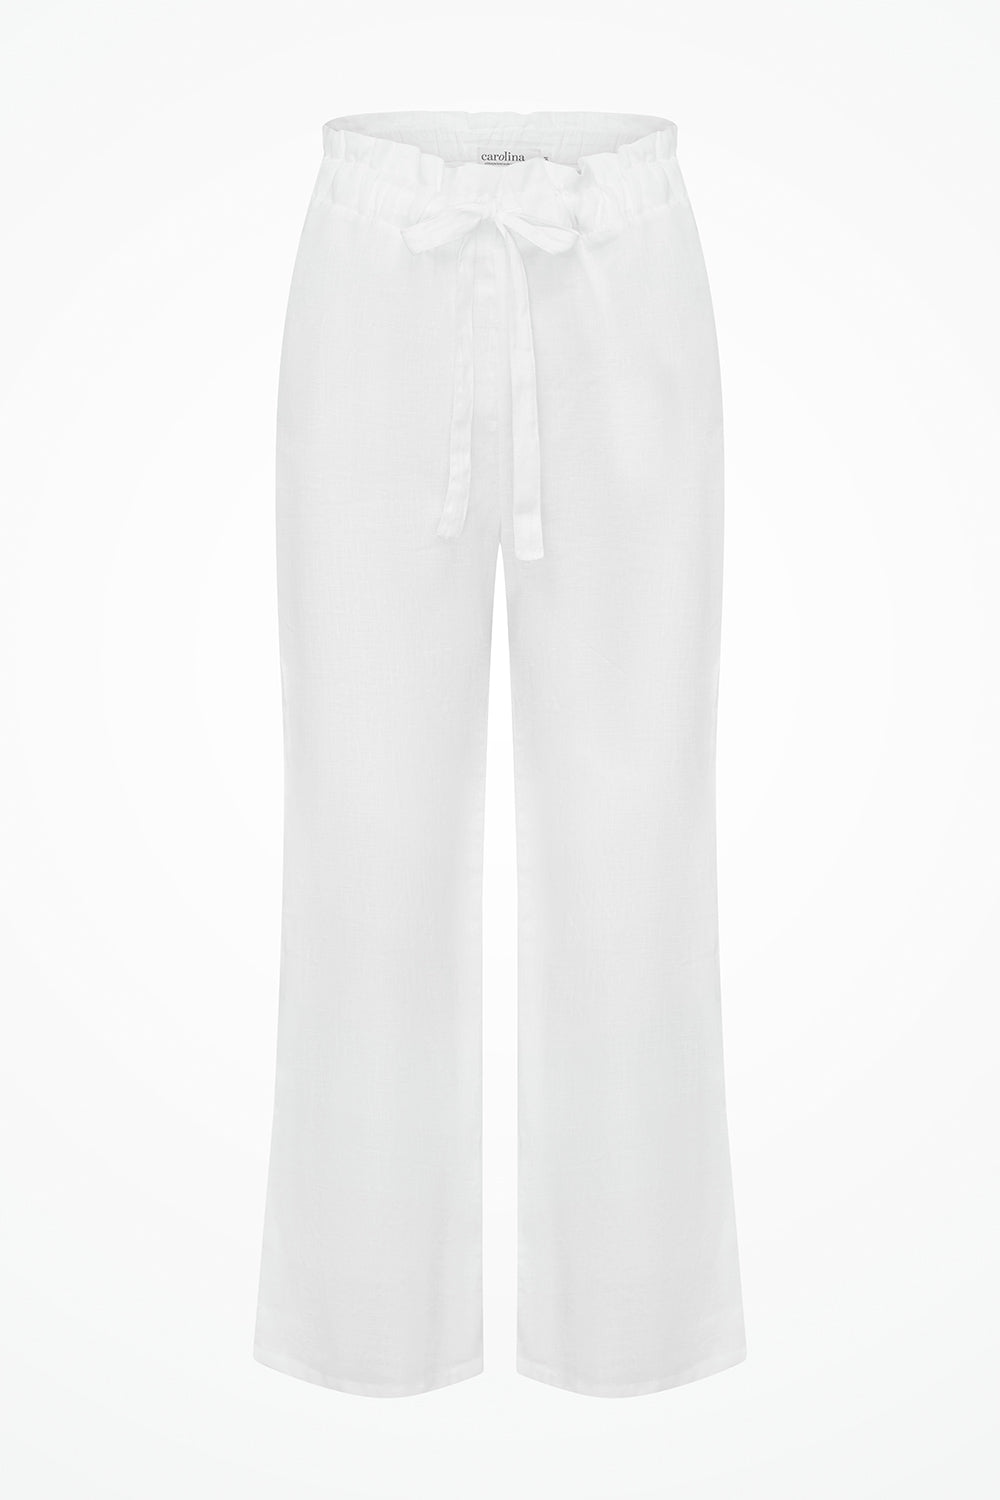 Carlotta Pure Italian Linen Pants White Pants